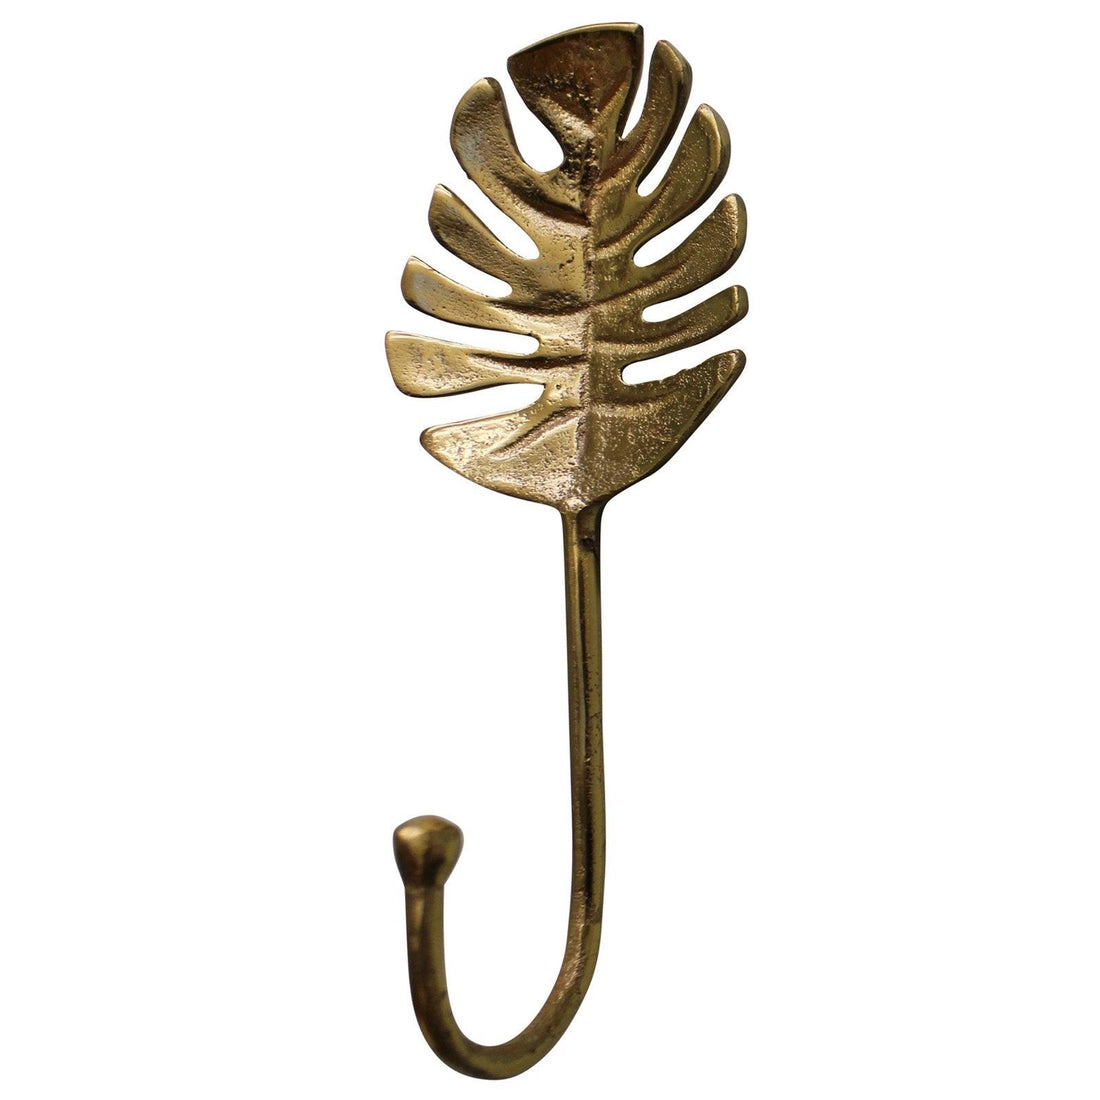 Gold Metal Palm Leaf Coat Hook - £12.99 - Coat Hooks 